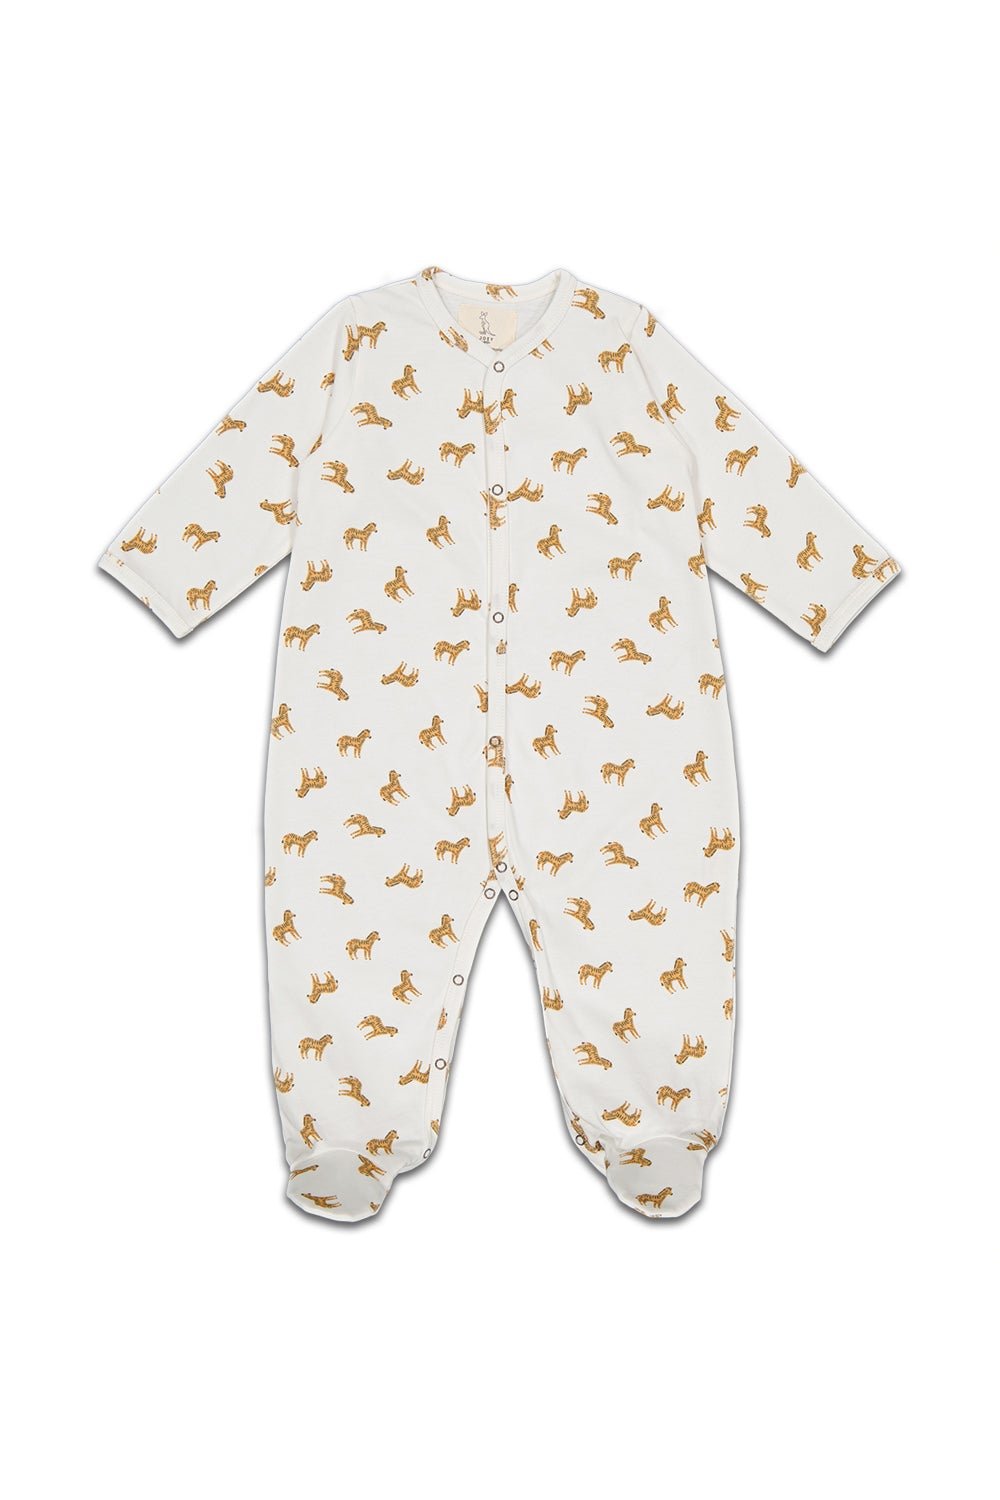 Pyjama-bebe-coton-bio-joey-paris-ethan-zebra-blanc-idees-cadeaux-de-naissance-eco-responsables.jpeg